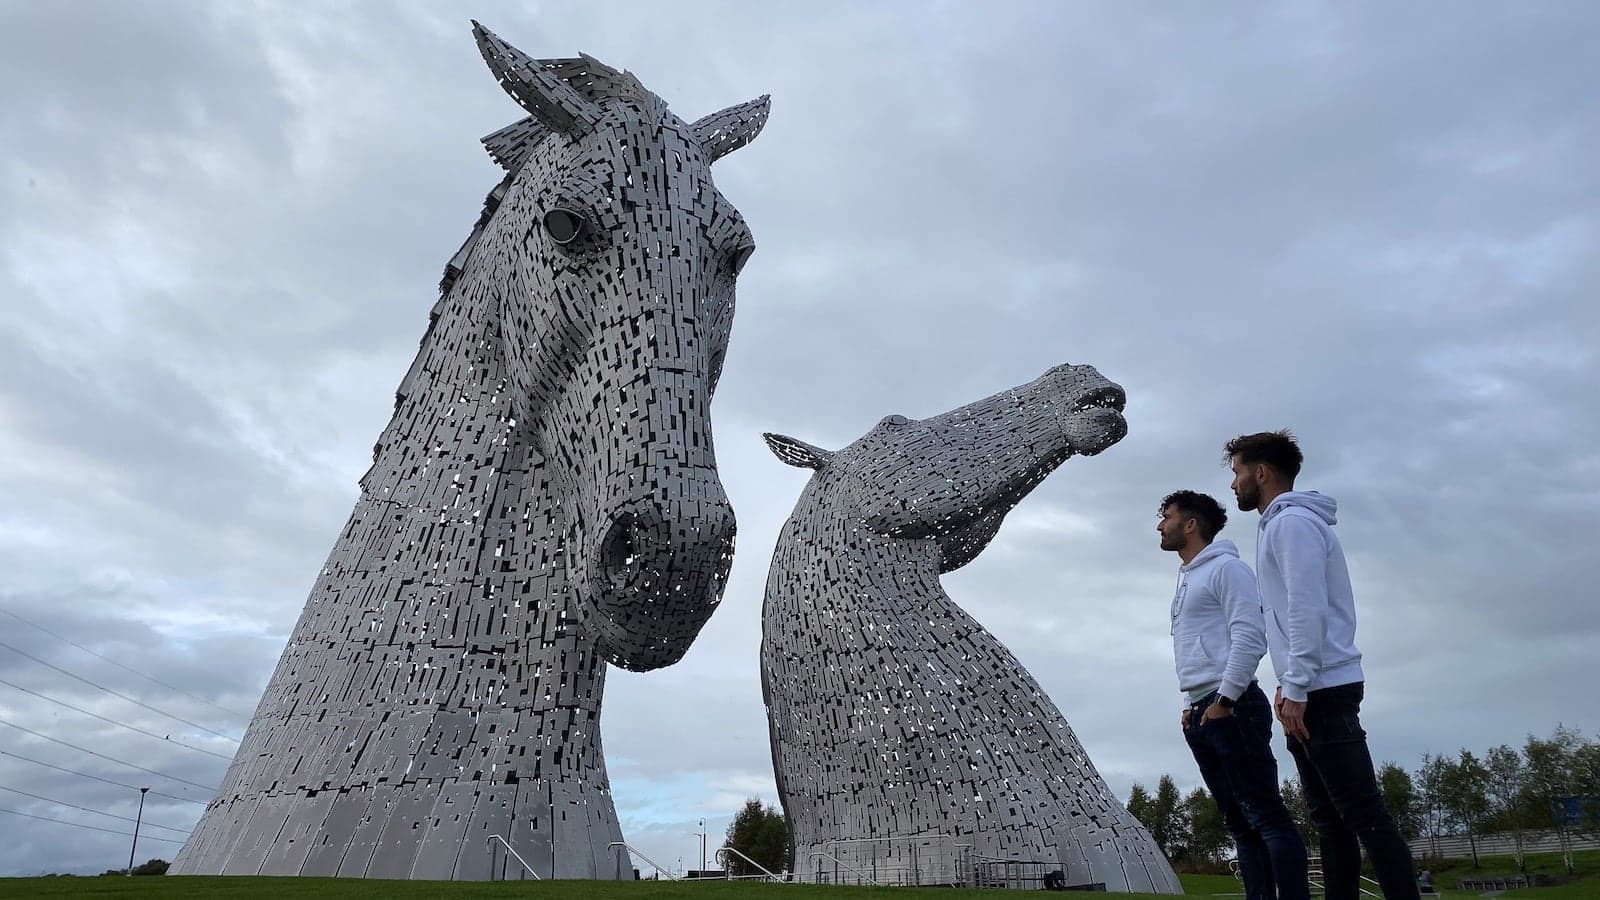 Kelpies giant horse head statues in Falkirk, Scotland.